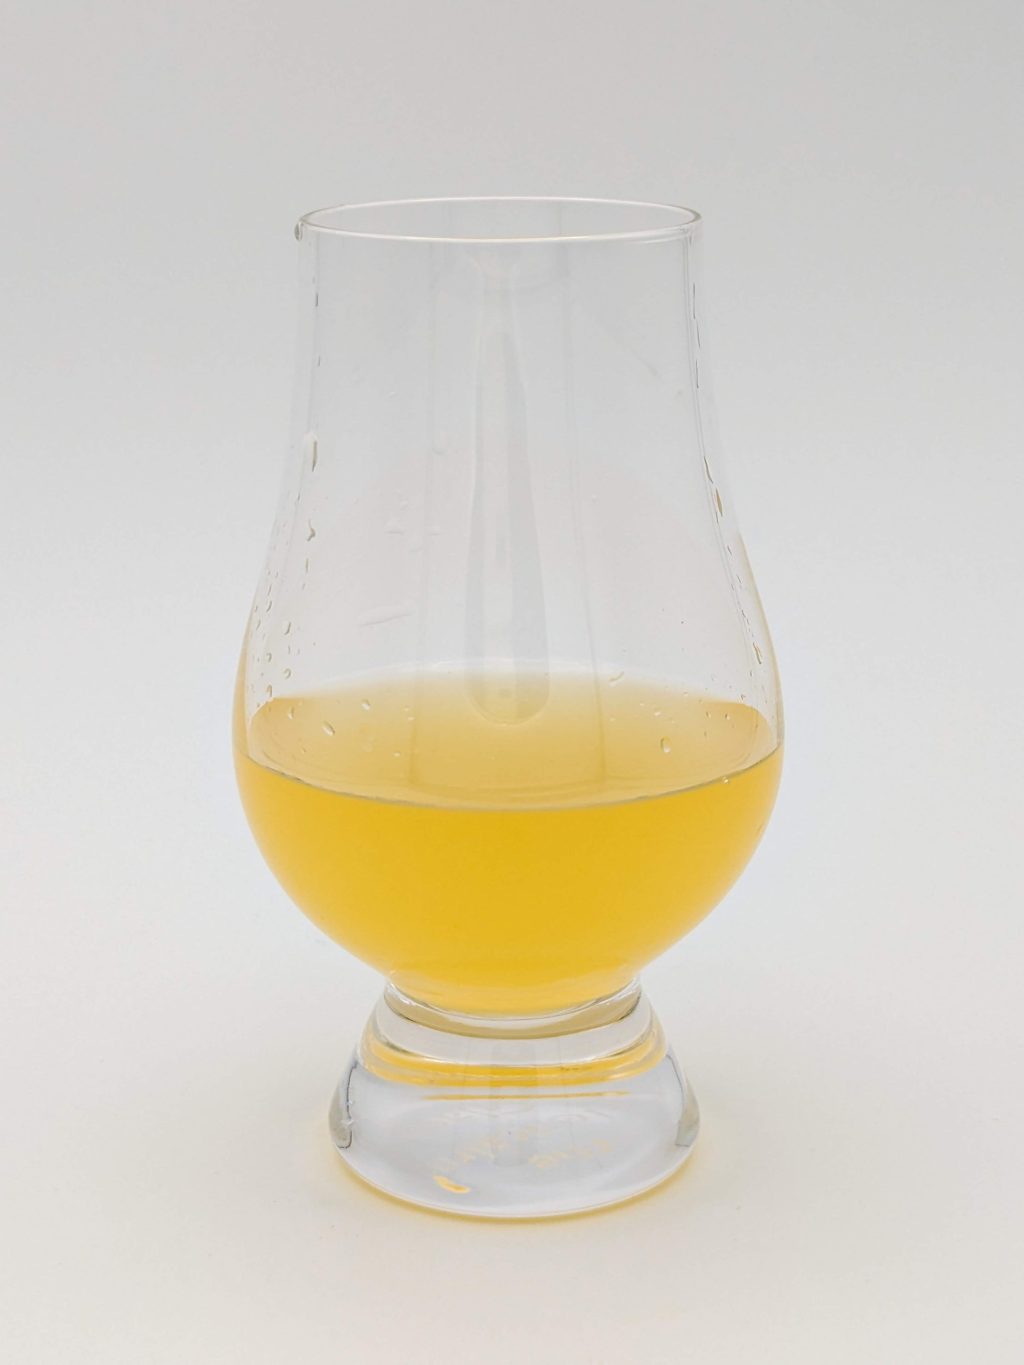 orange liquid in a glencairn glass